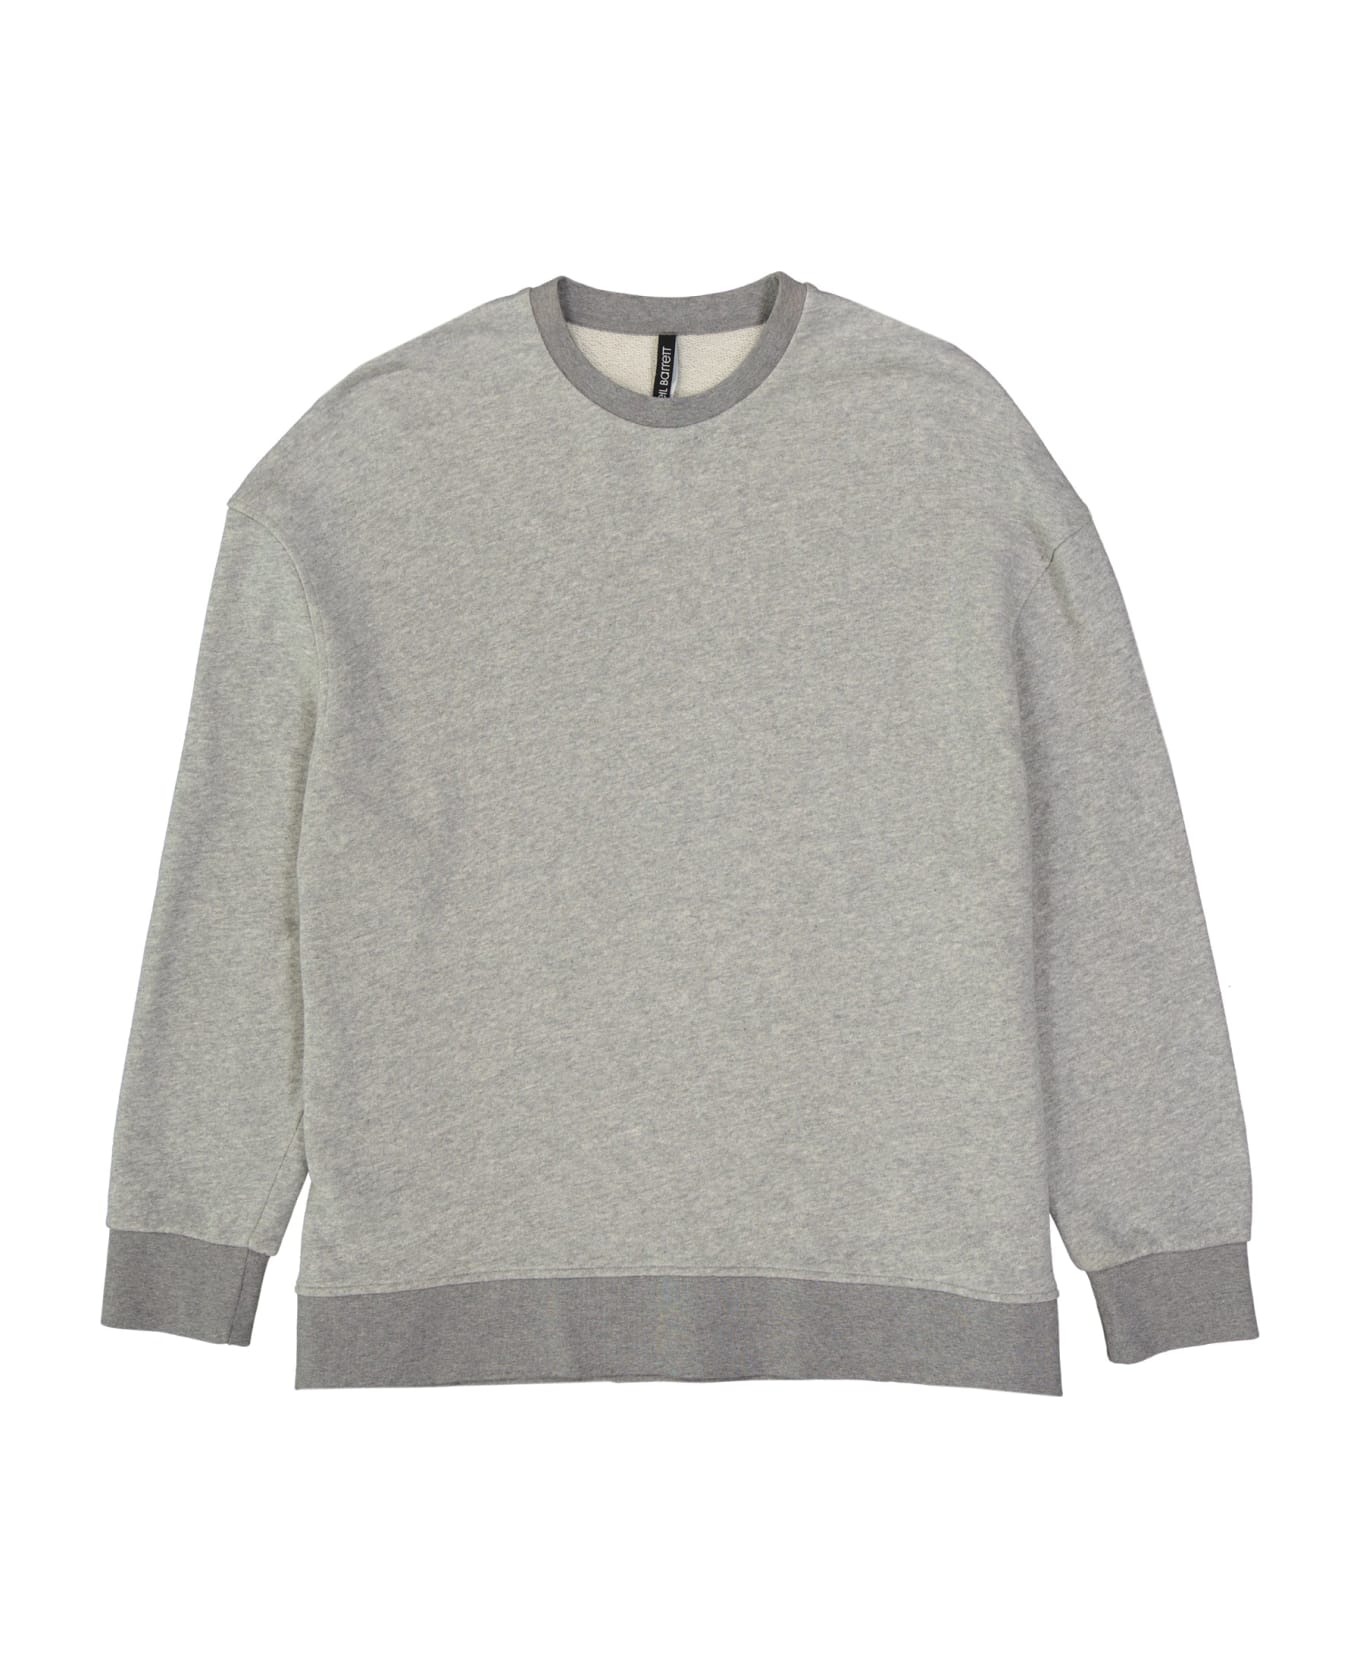 Neil Barrett Sweatshirt - Gray